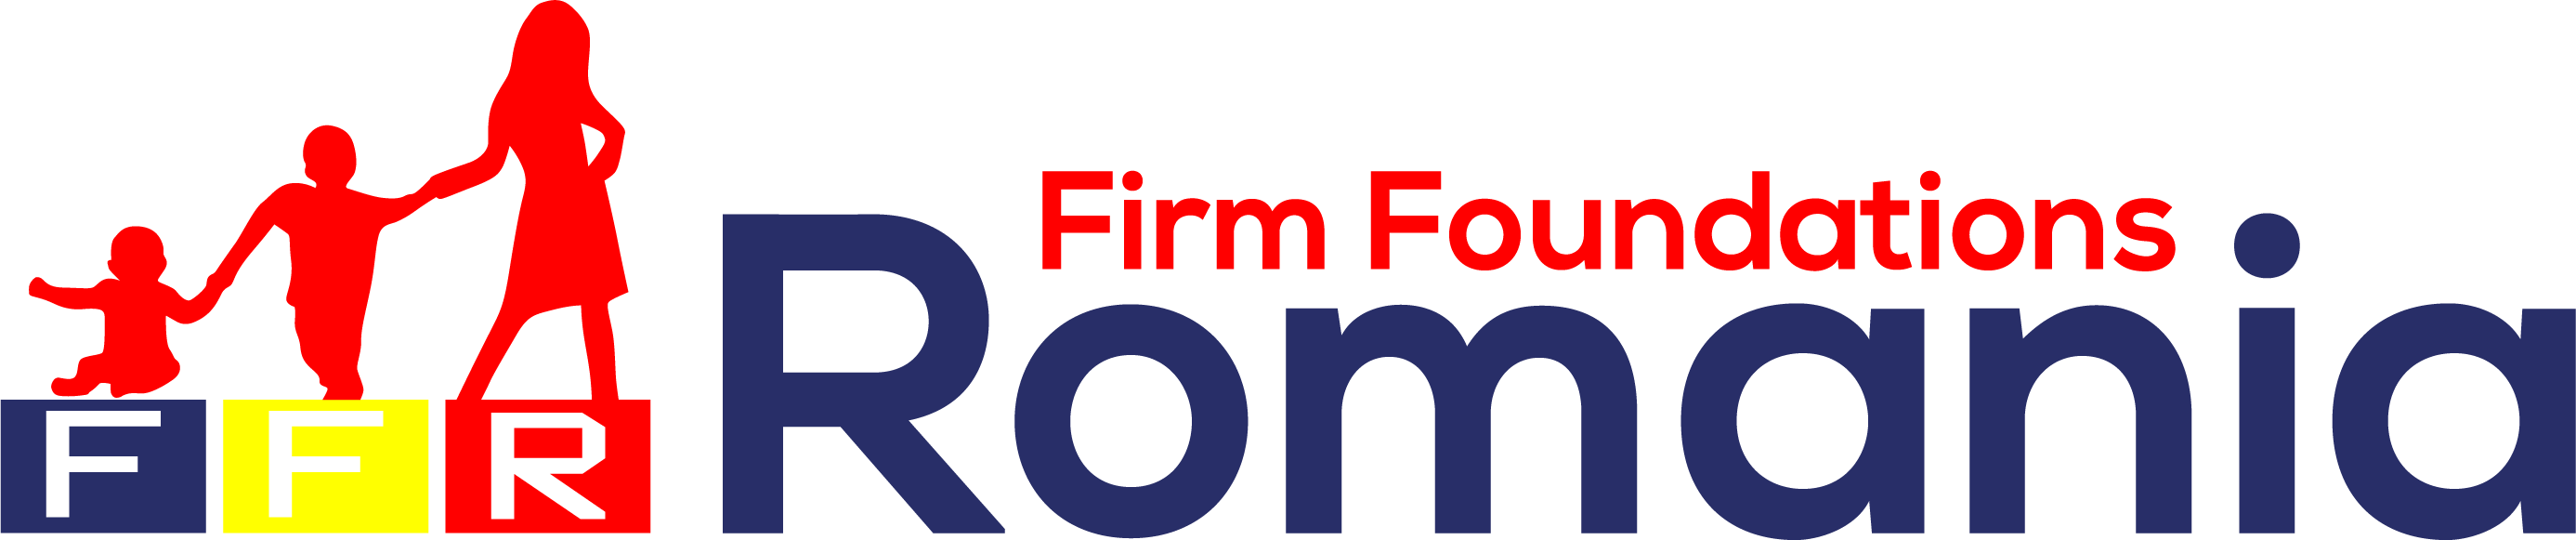 Firm Foundations Romania logo